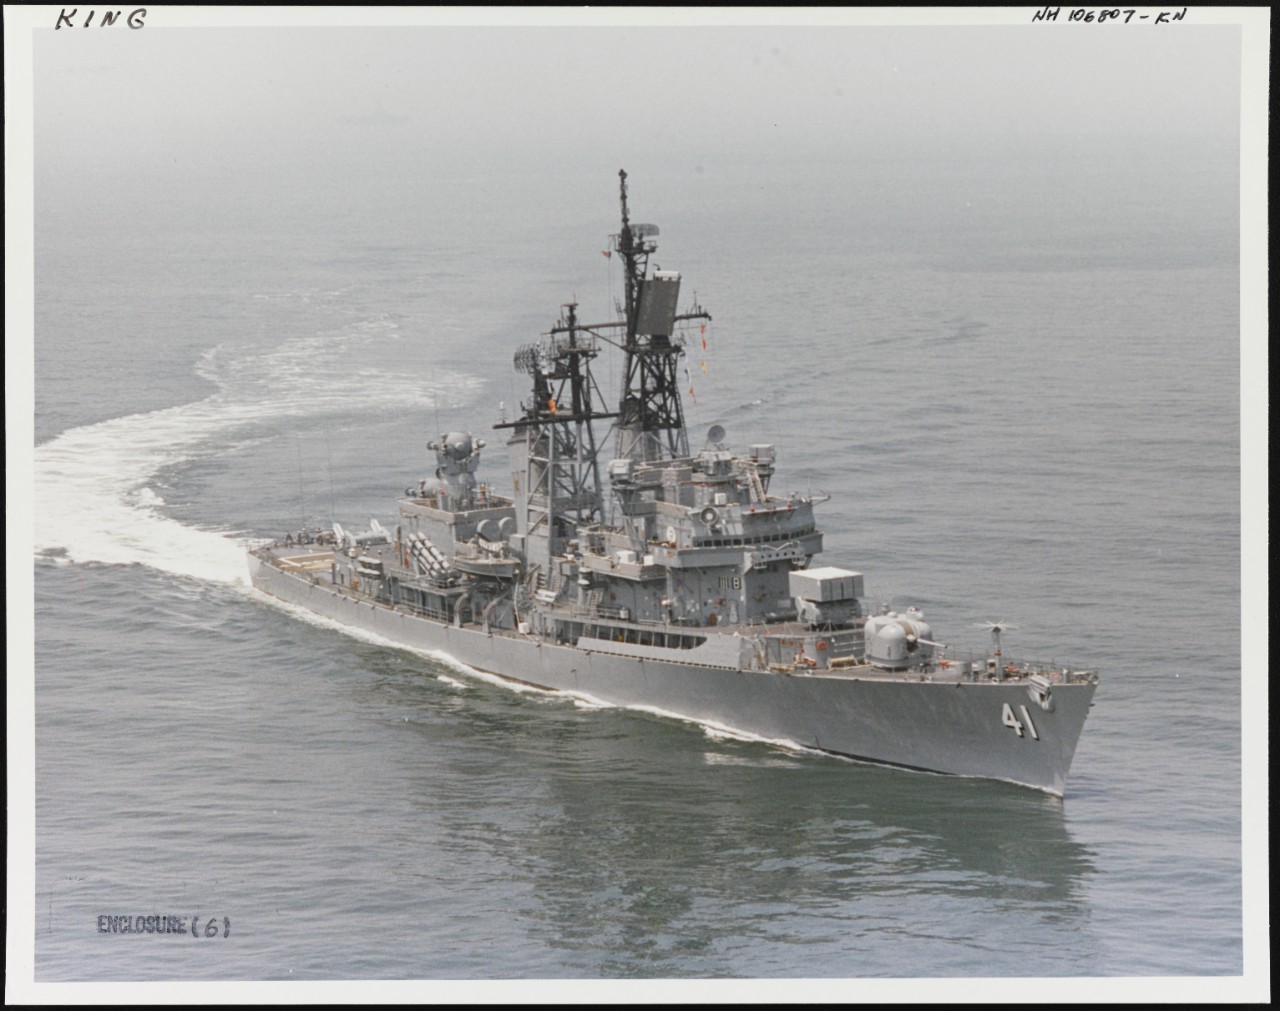 Photo # NH 106807-KN USS King